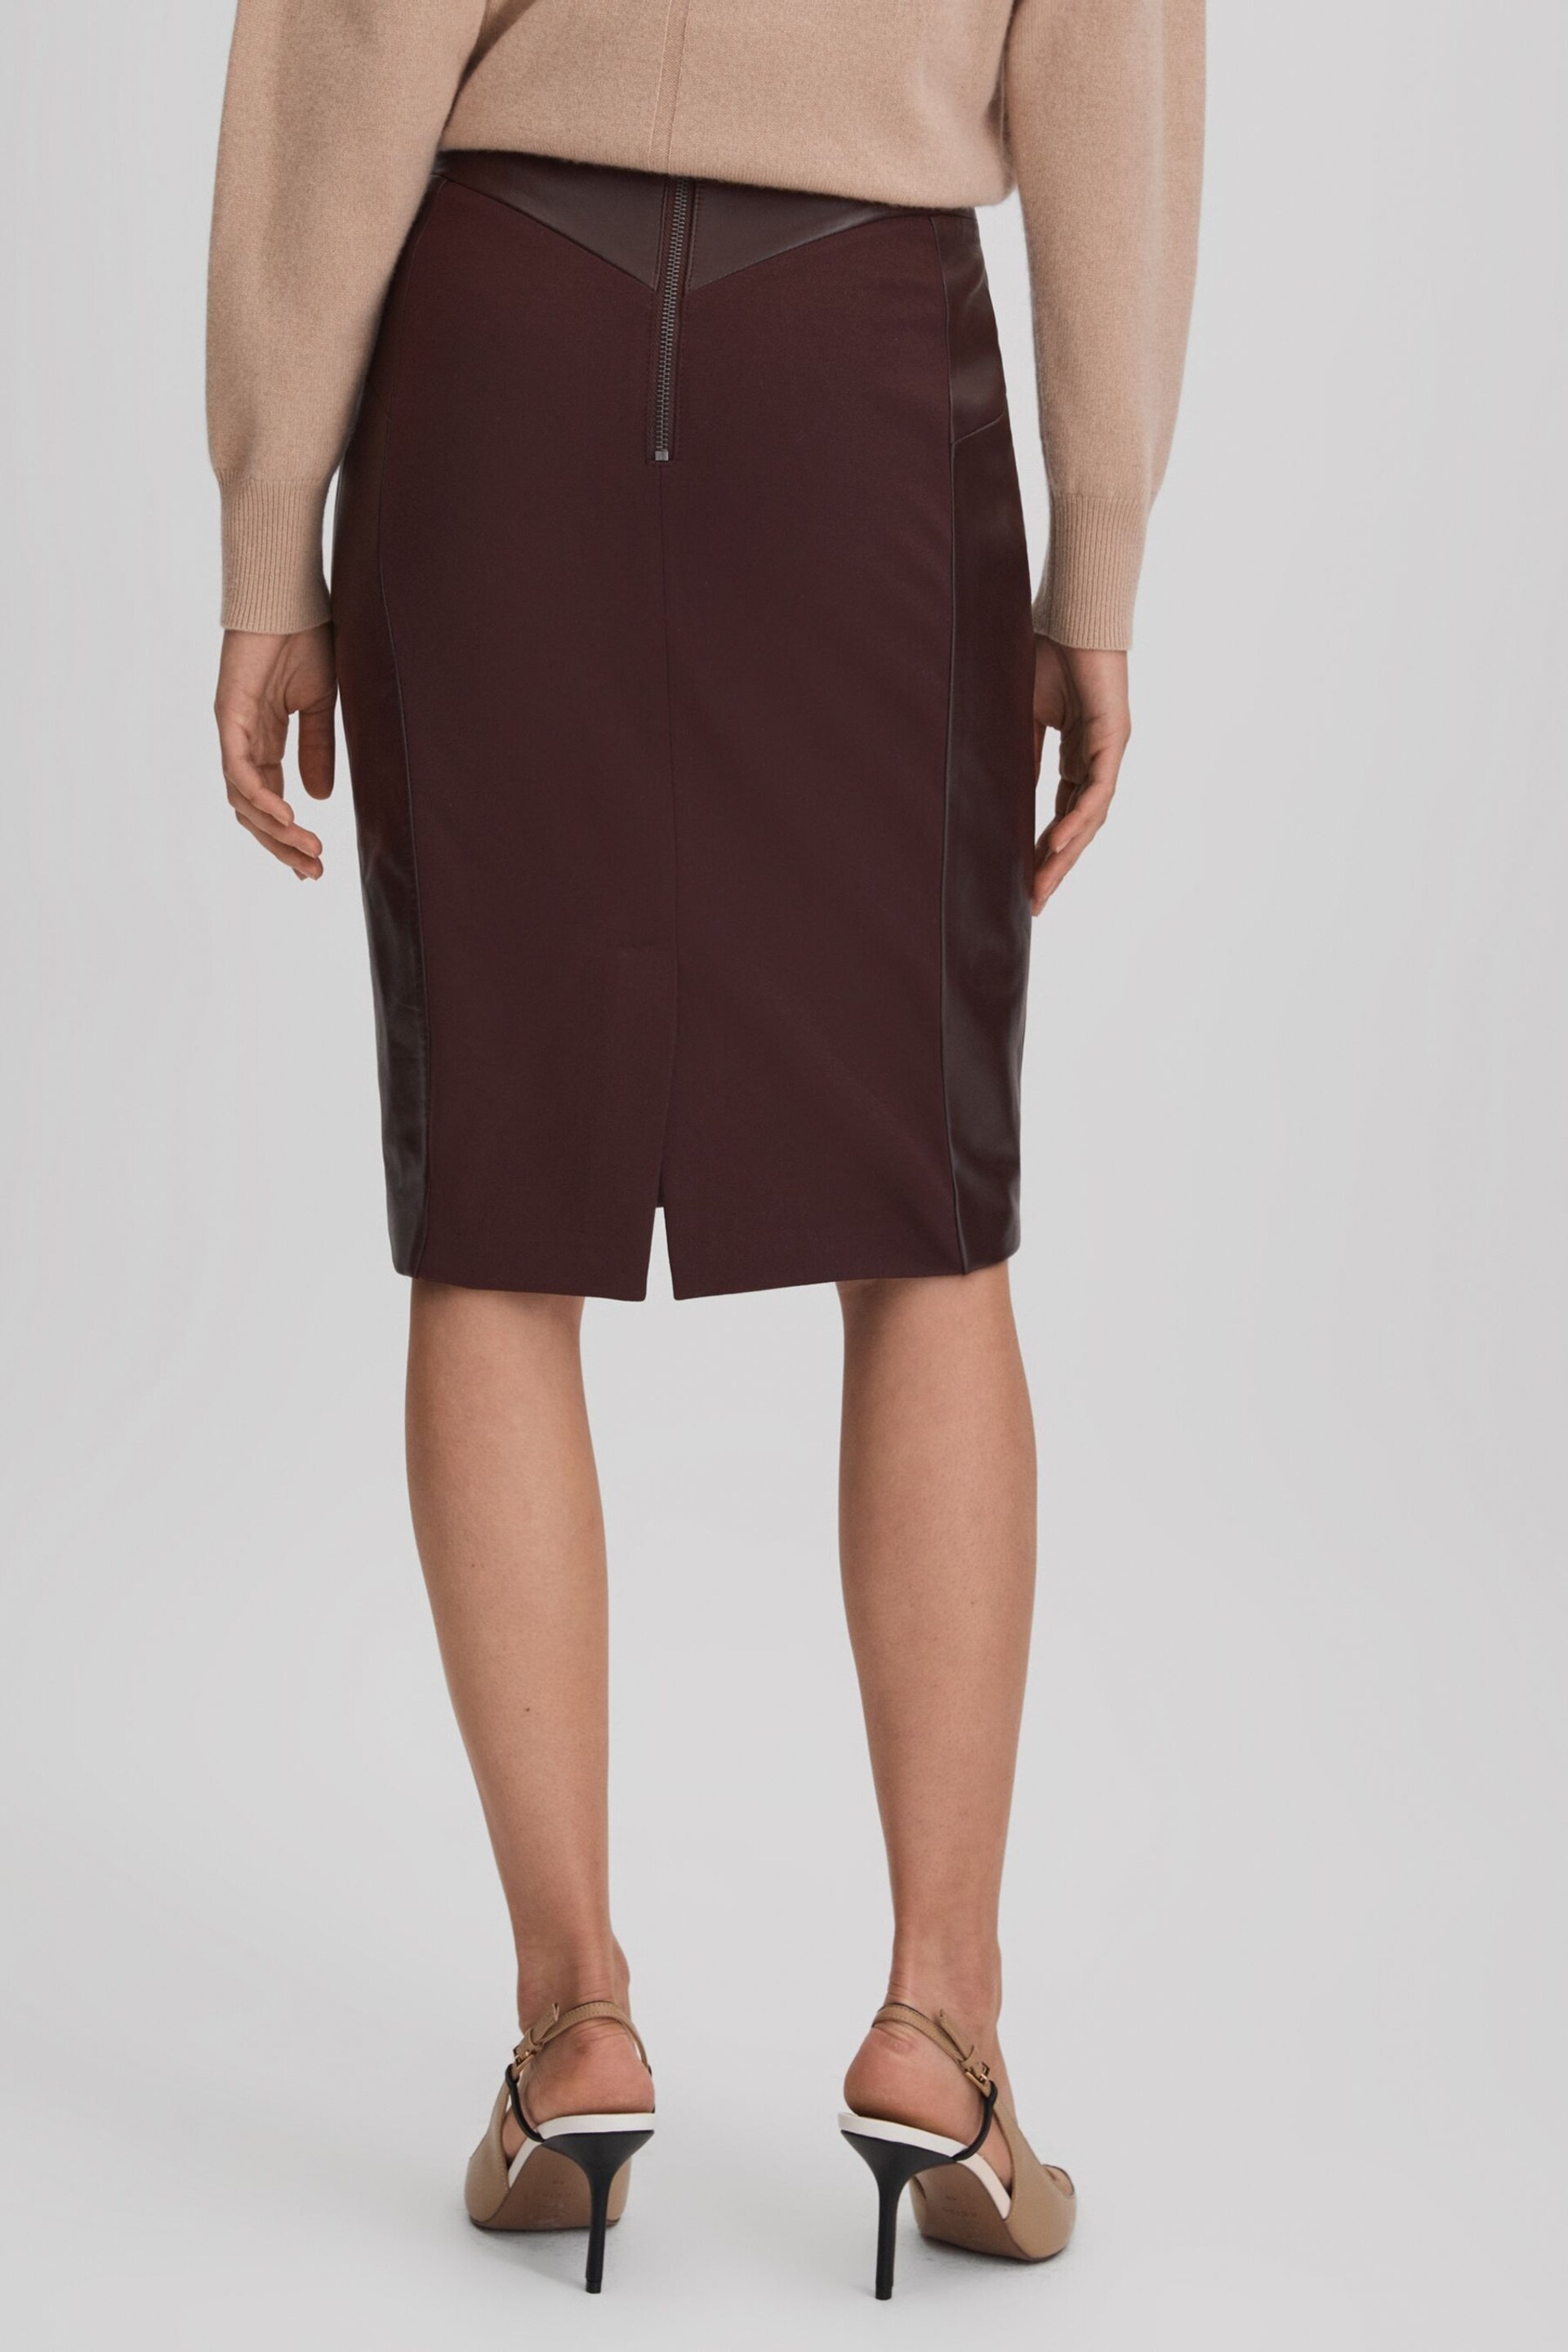 Reiss Berry Raya Leather High Rise Midi Skirt - Image 5 of 5